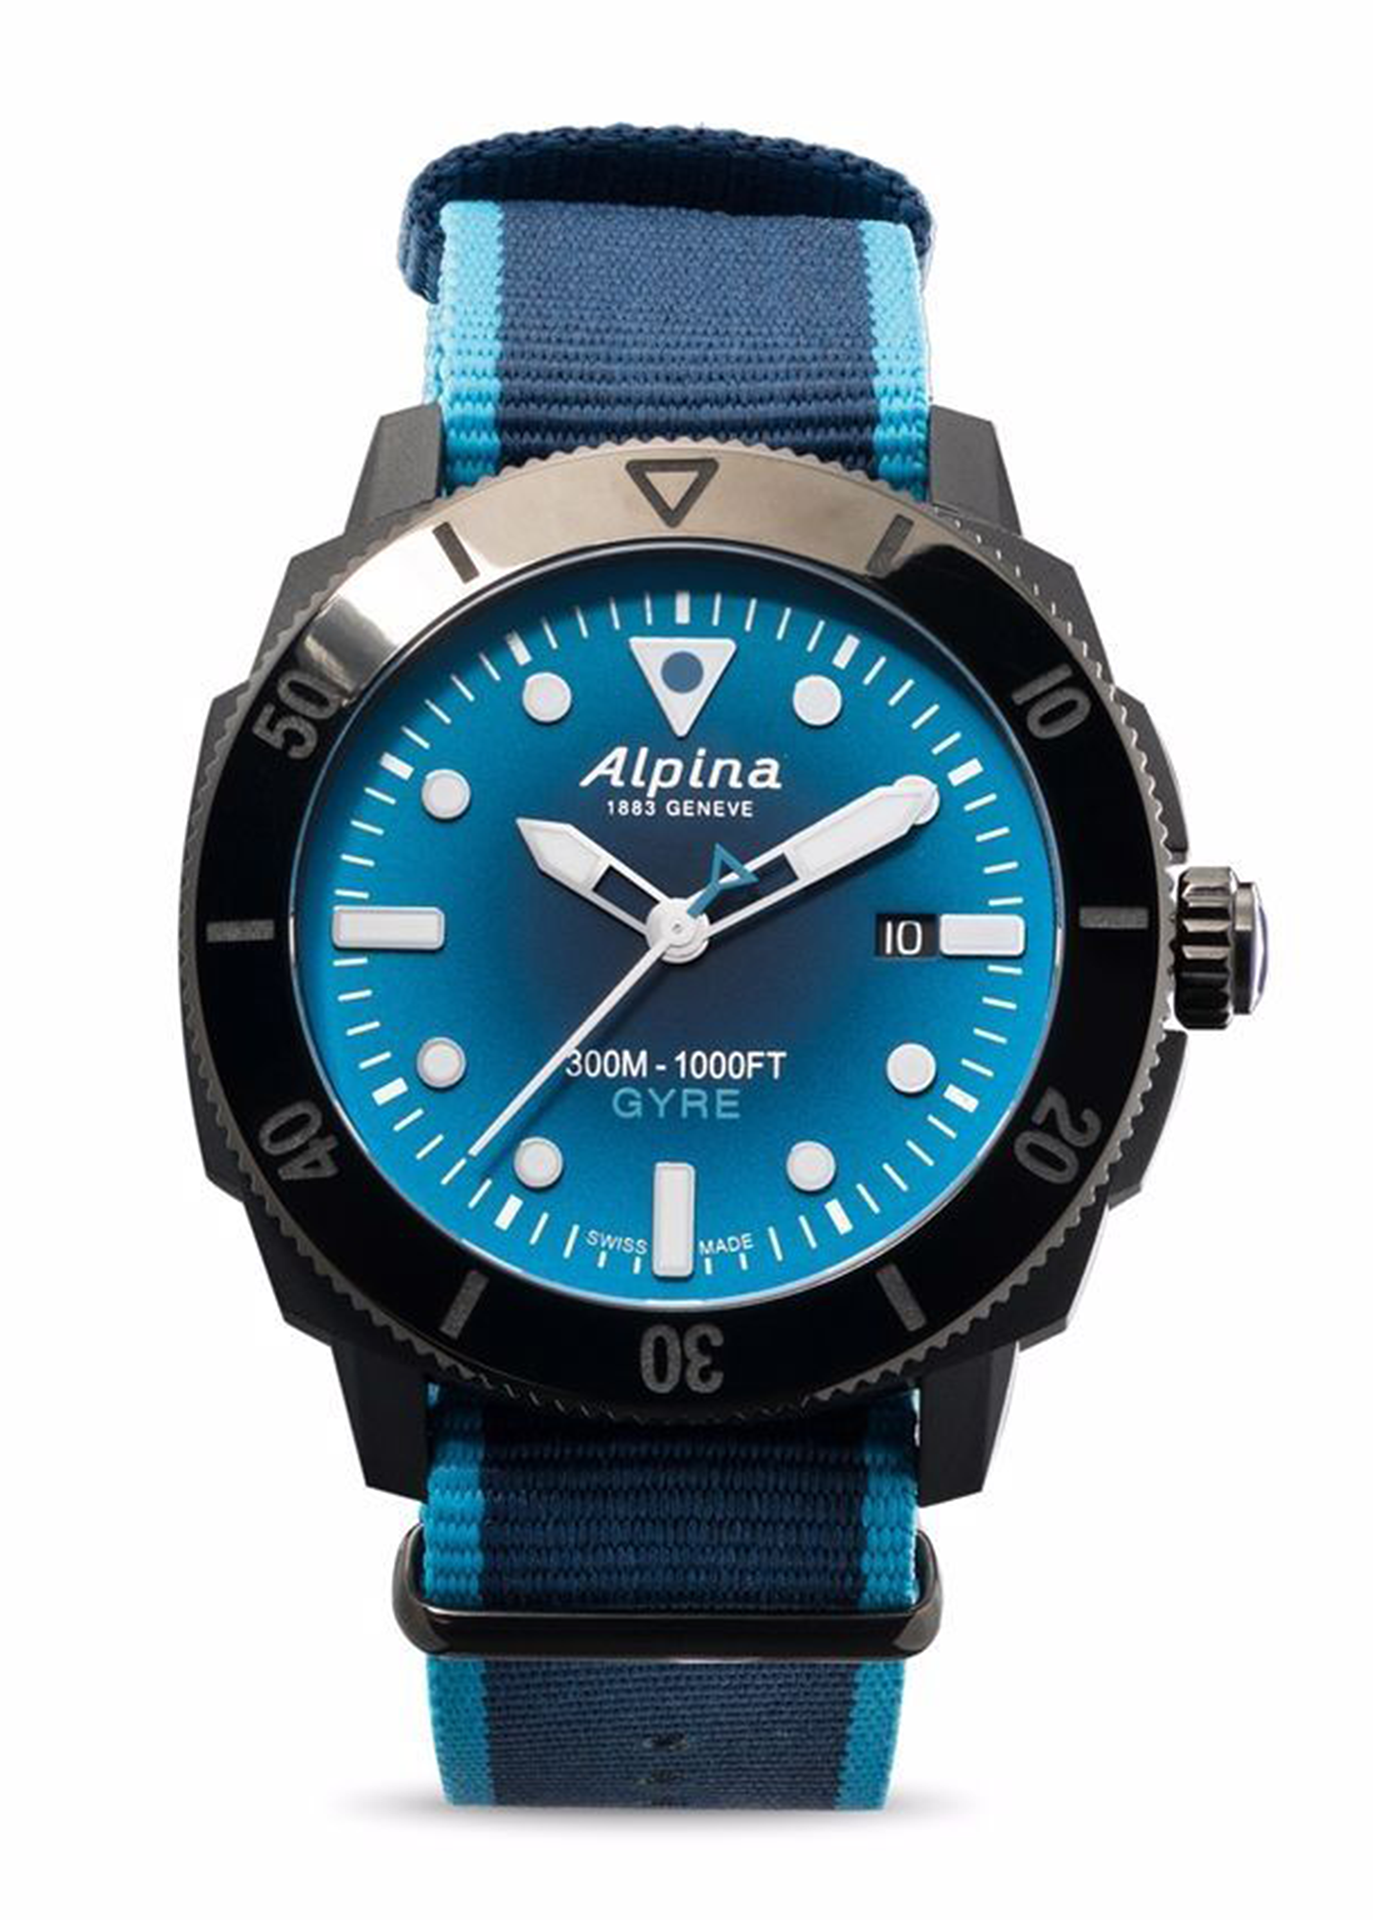 Alpinia Seastrong Diver Gyre Automatic Blue Dial Men's Watch AL-525LNSB4VG6 Image